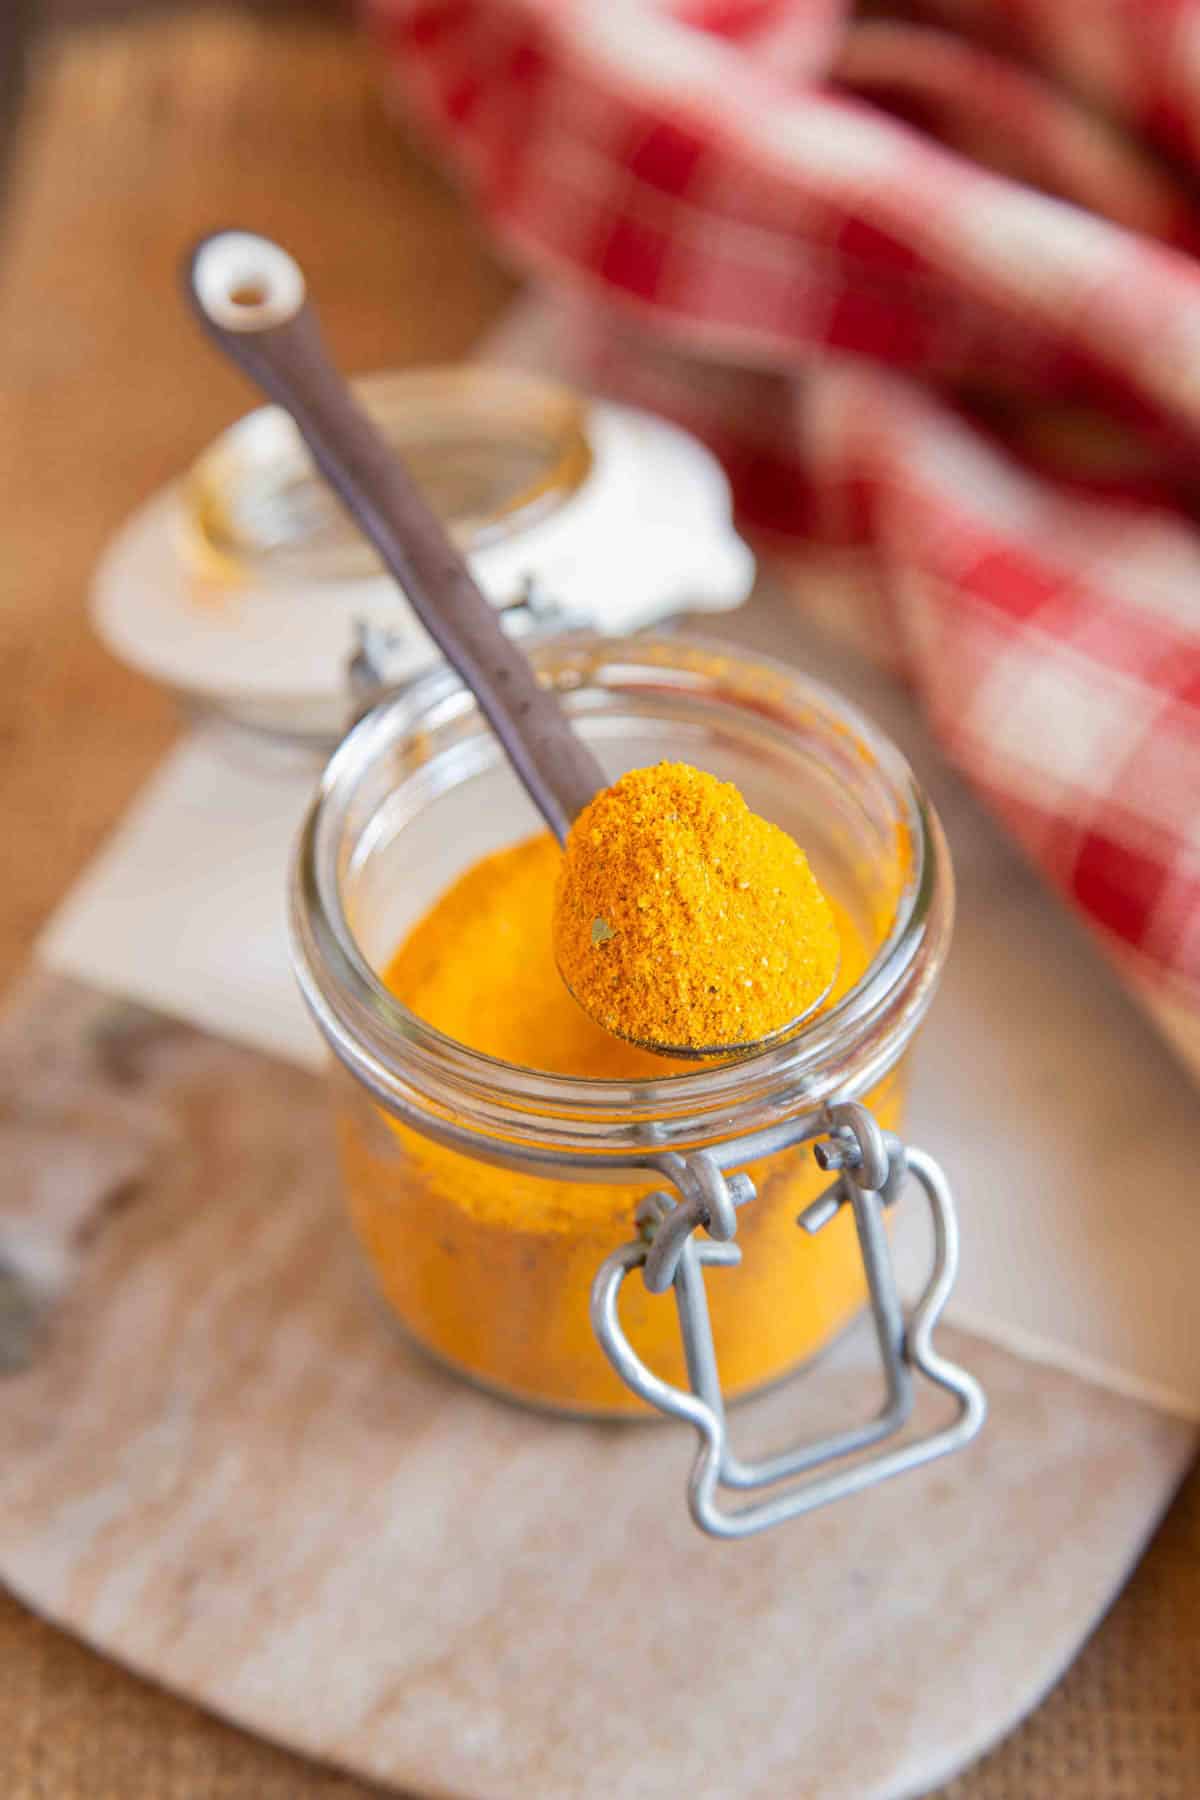 a spoon of golden pilau rice seasoning taken from the jar